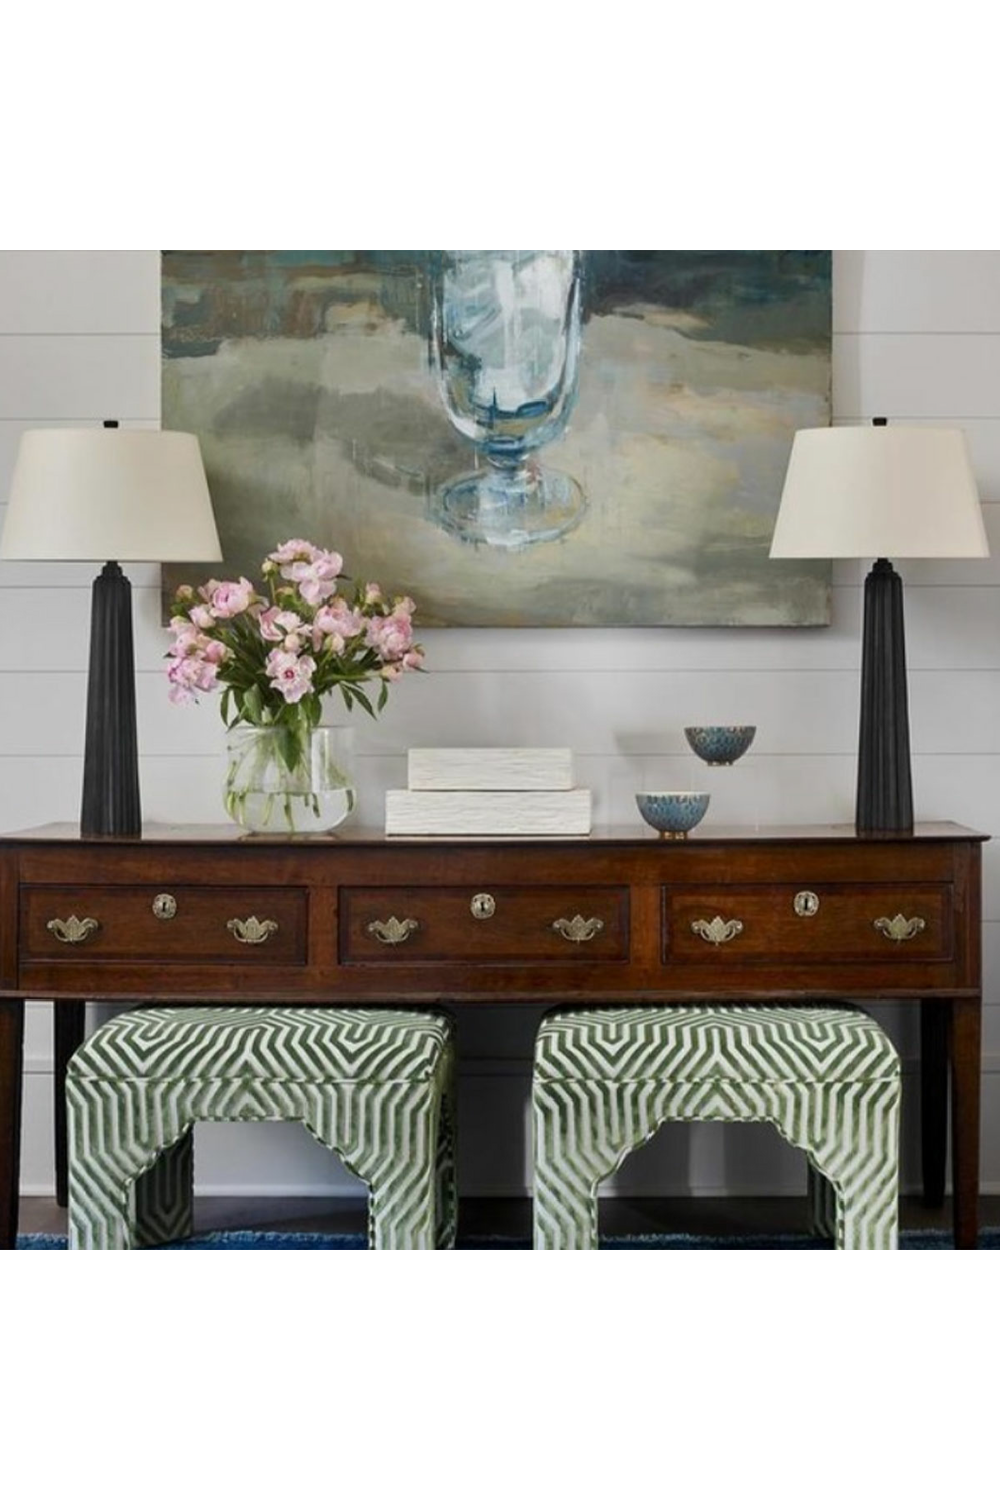 Art Deco Table Lamp | Andrew Martin Fluted Spire | OROA